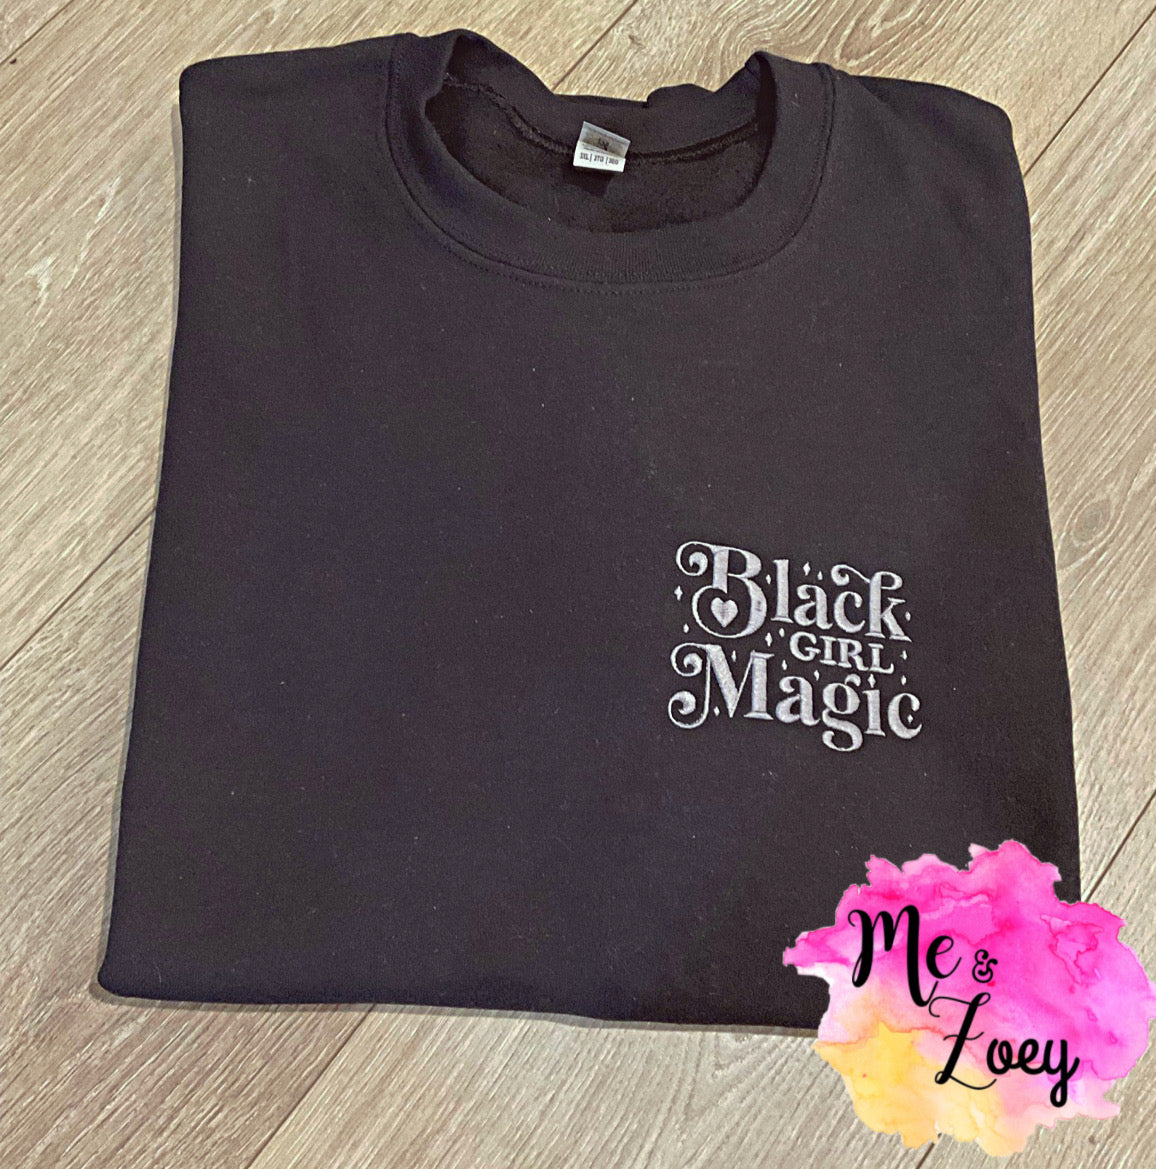 Black girl magic ✨ - MeAndZoey